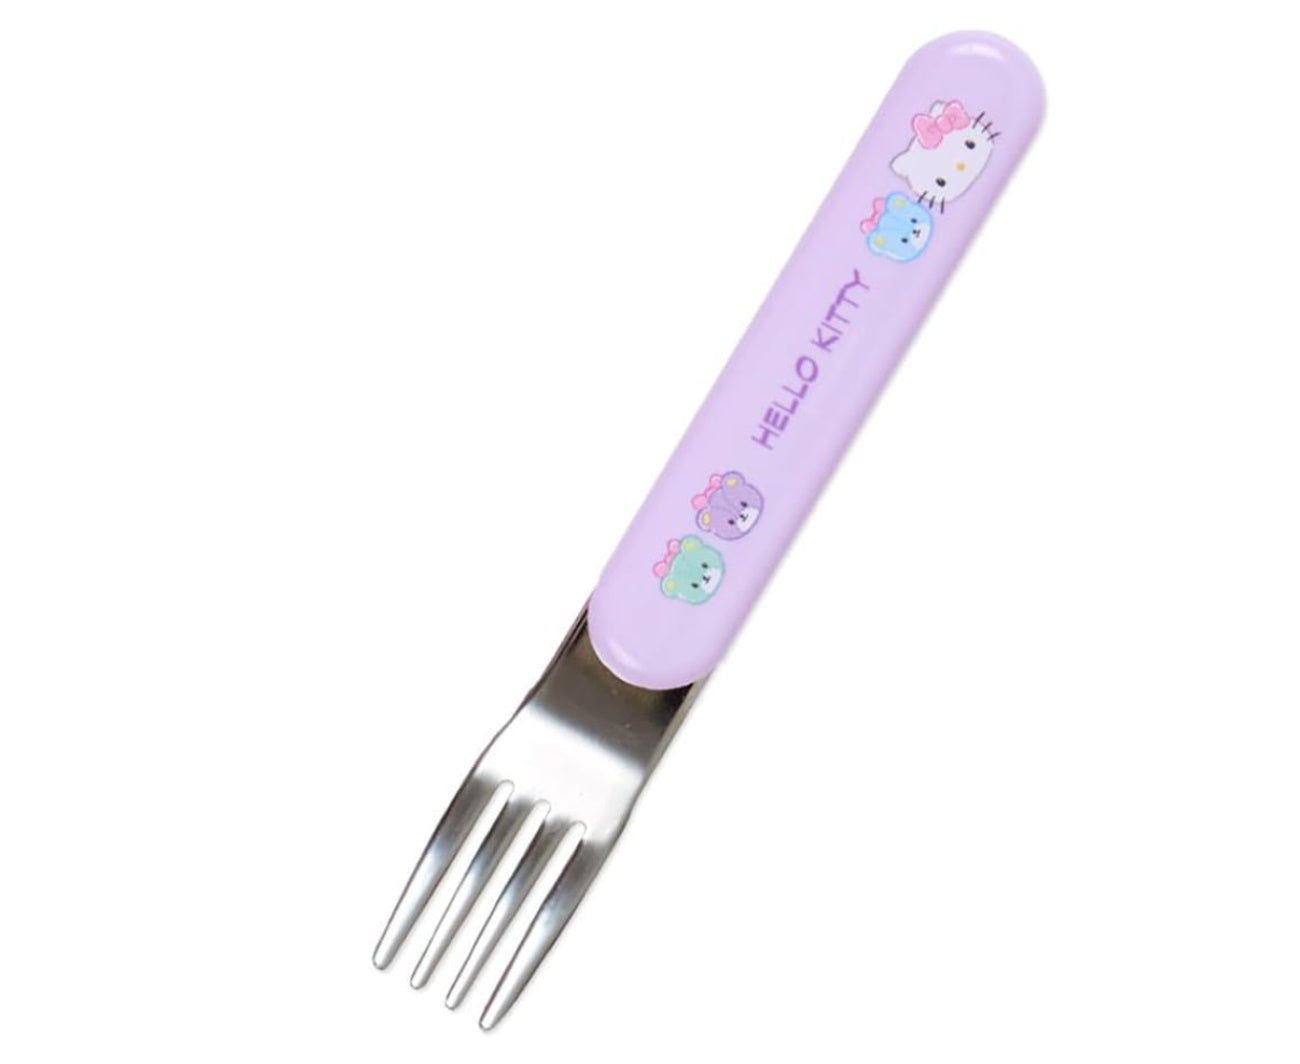 Hello Kitty Cutlery Set in Case